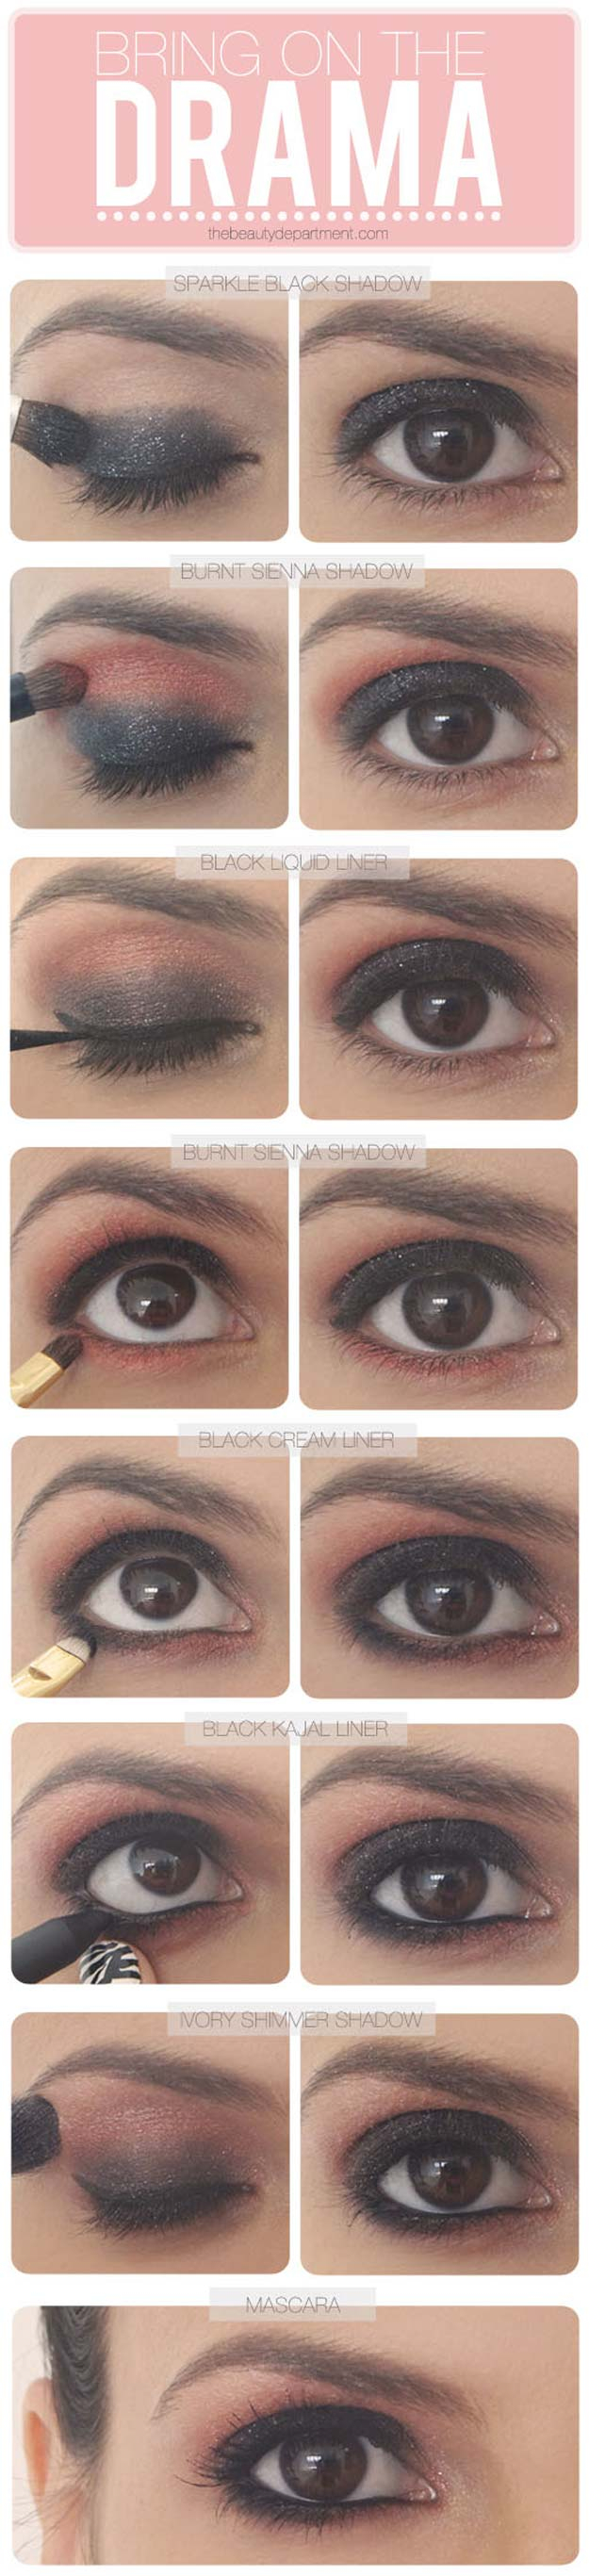 Black Eye Makeup Step By Step 34 Sexy Eye Makeup Tutorials The Goddess